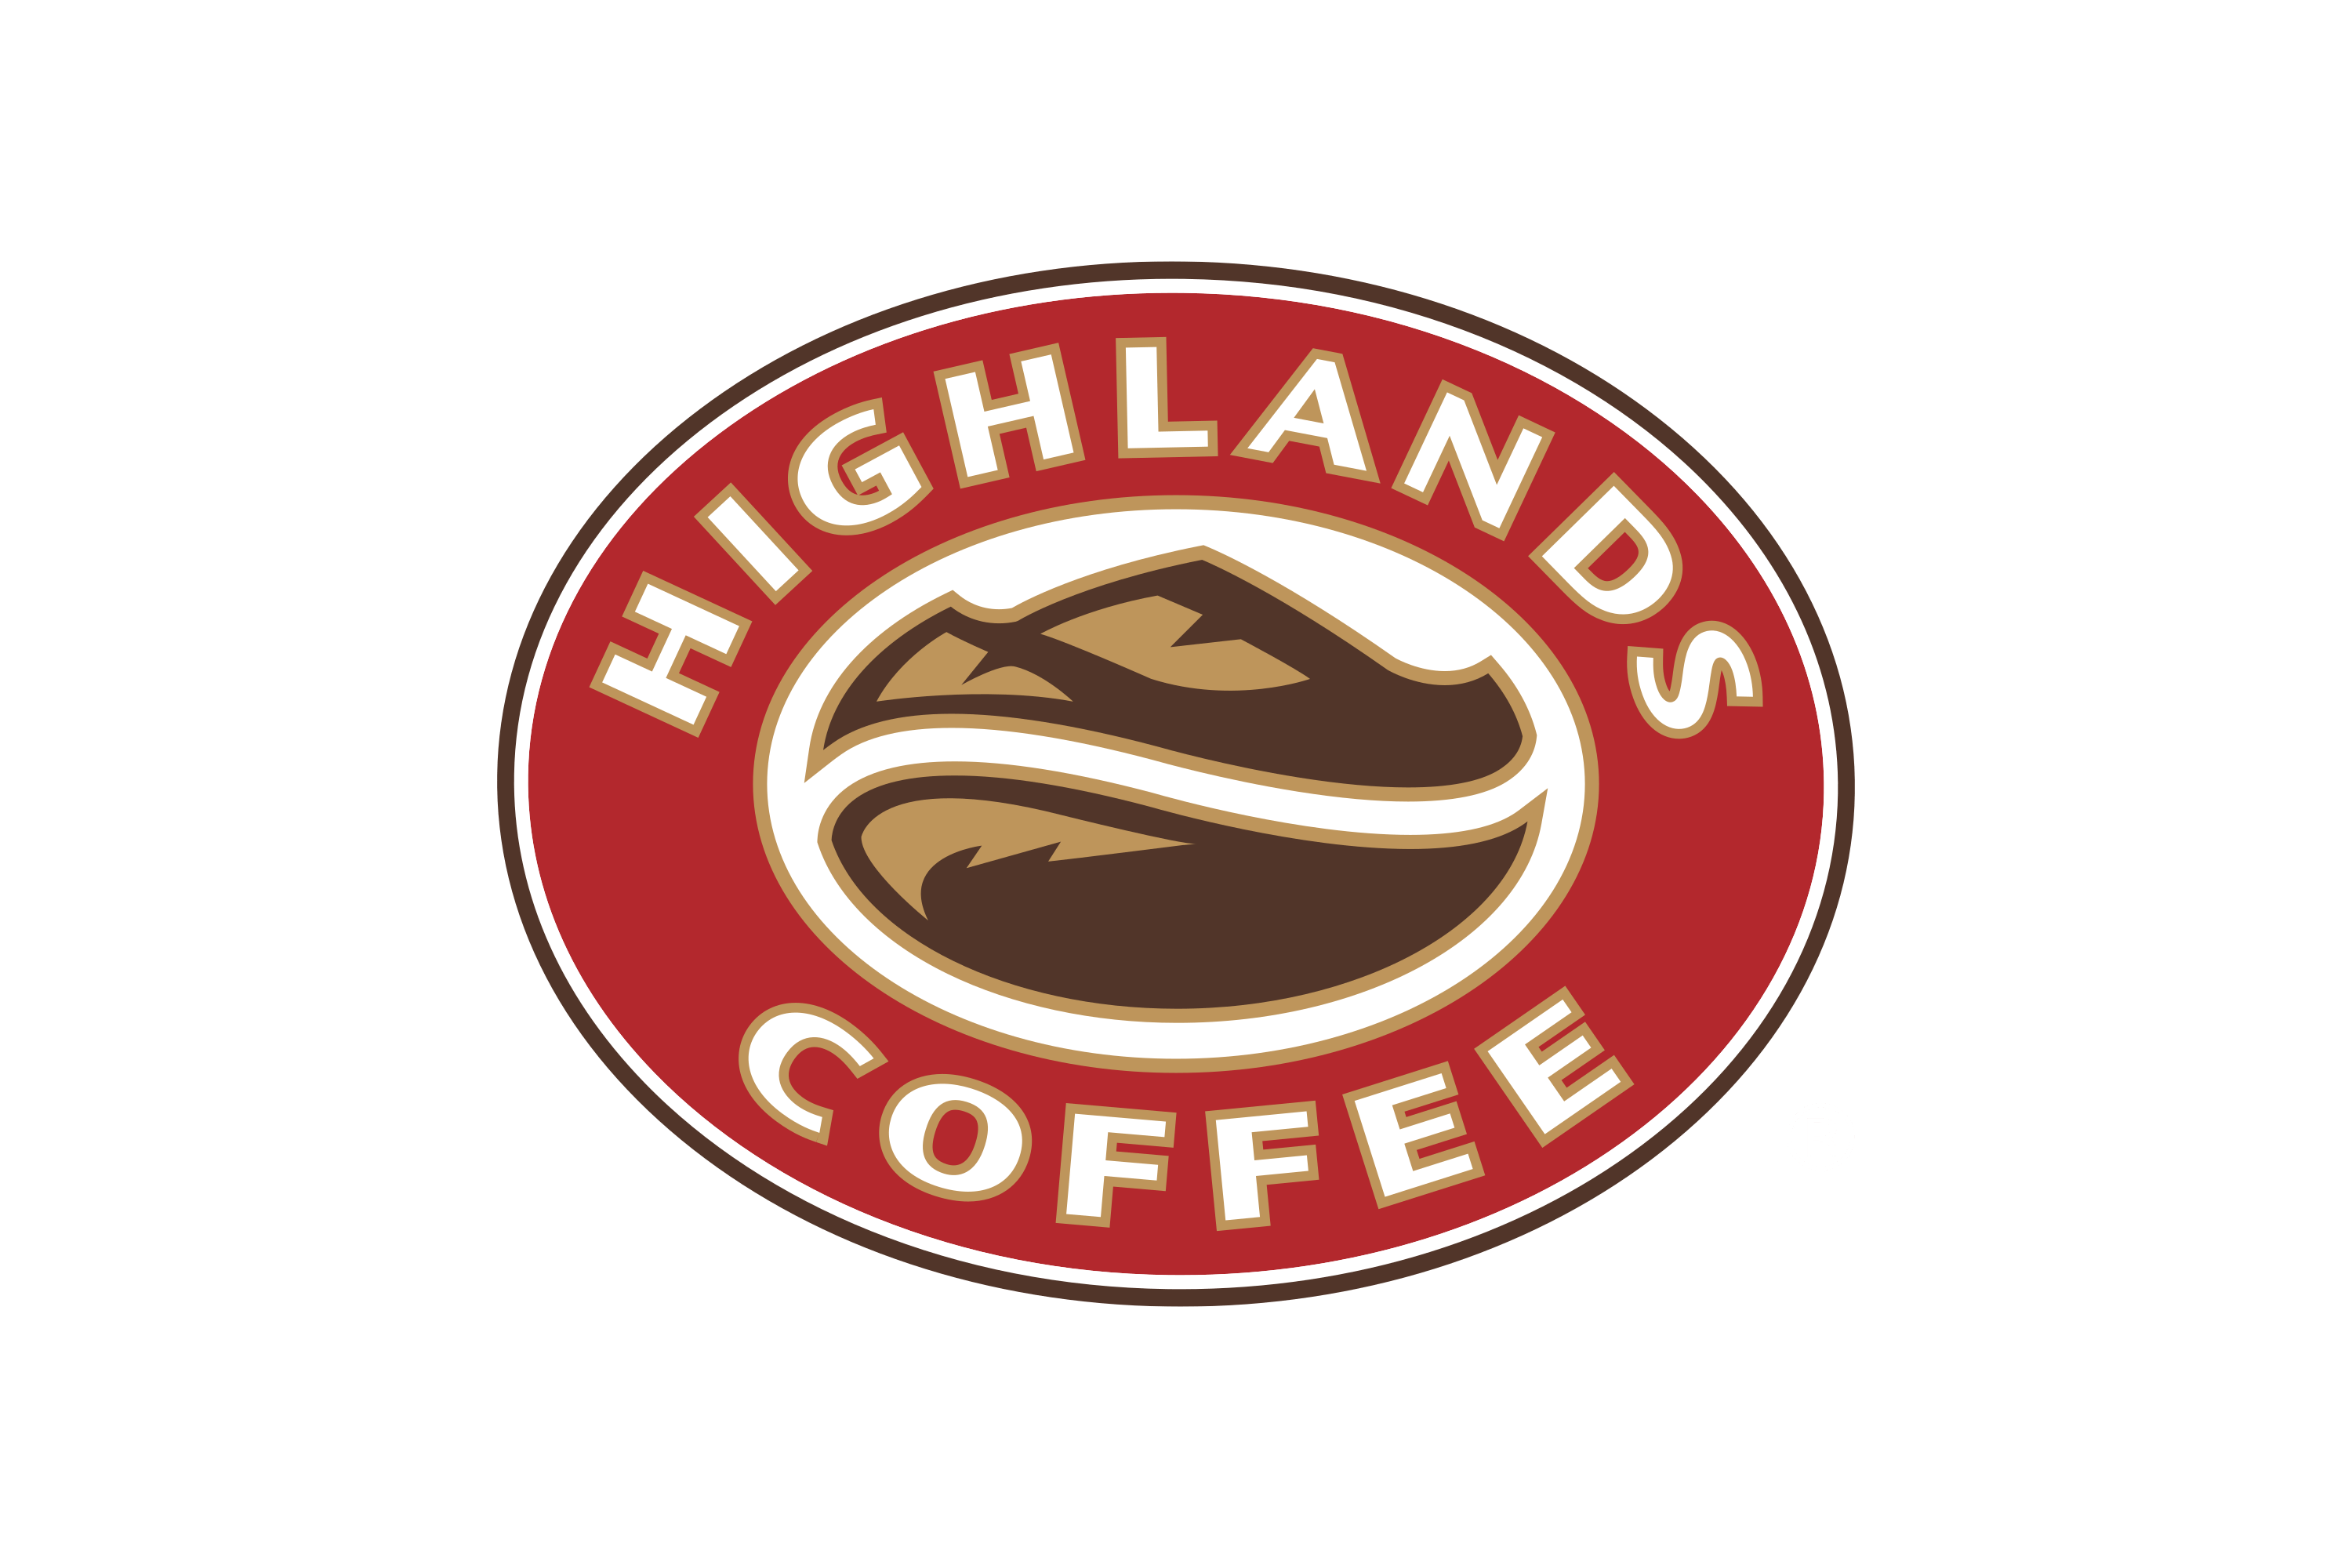 Highlands Coffee Logo - Free download logo in SVG or PNG format